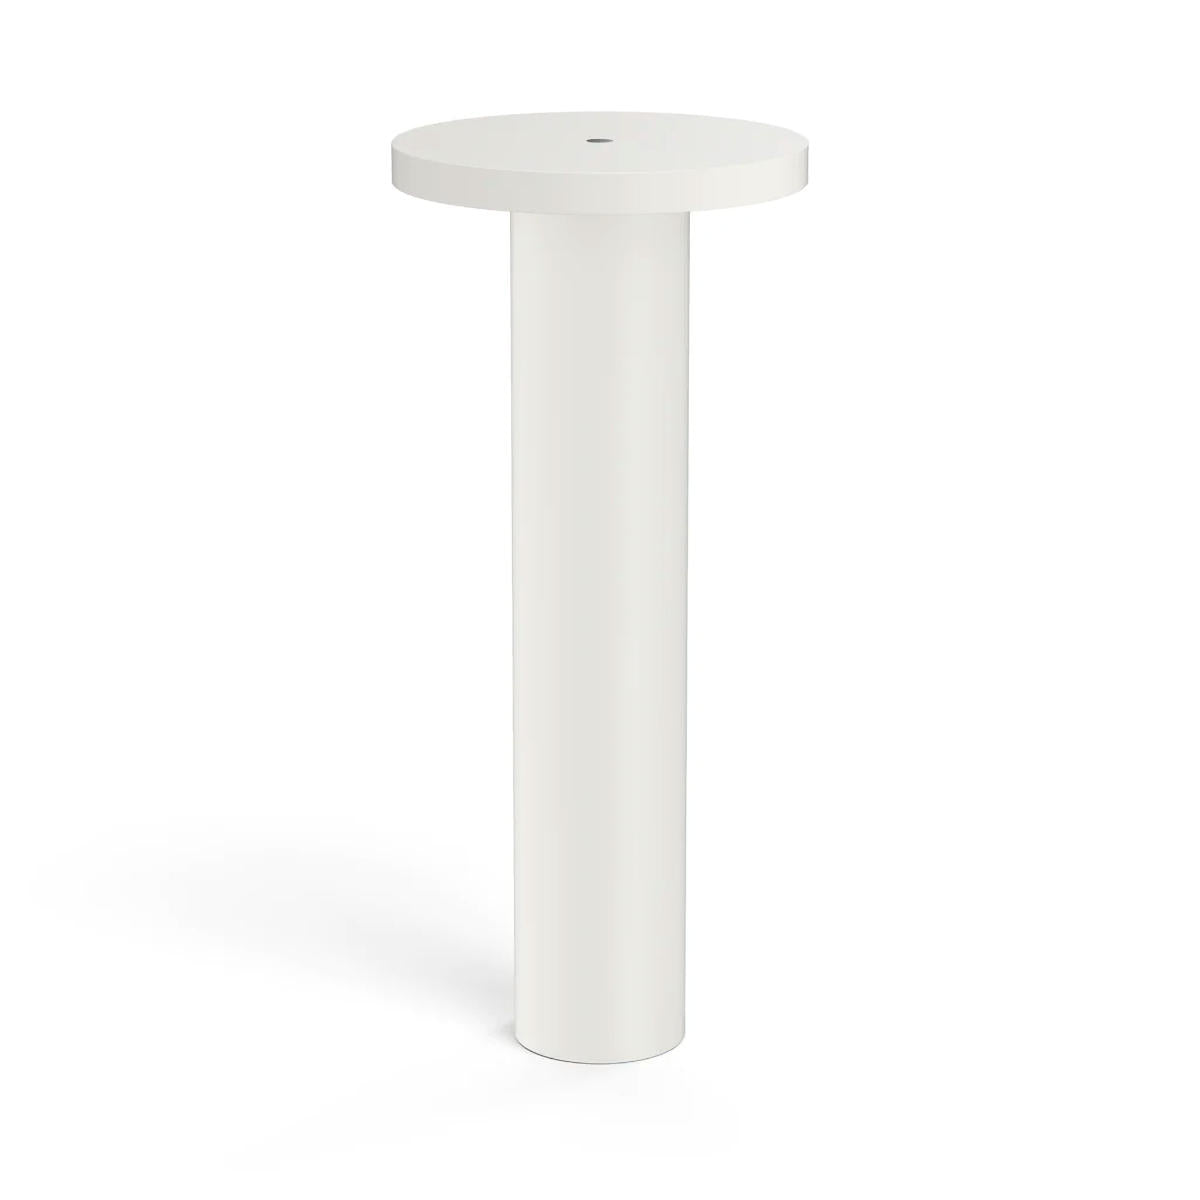 Pablo Designs Luci Portable Table Light (Rechargeable)